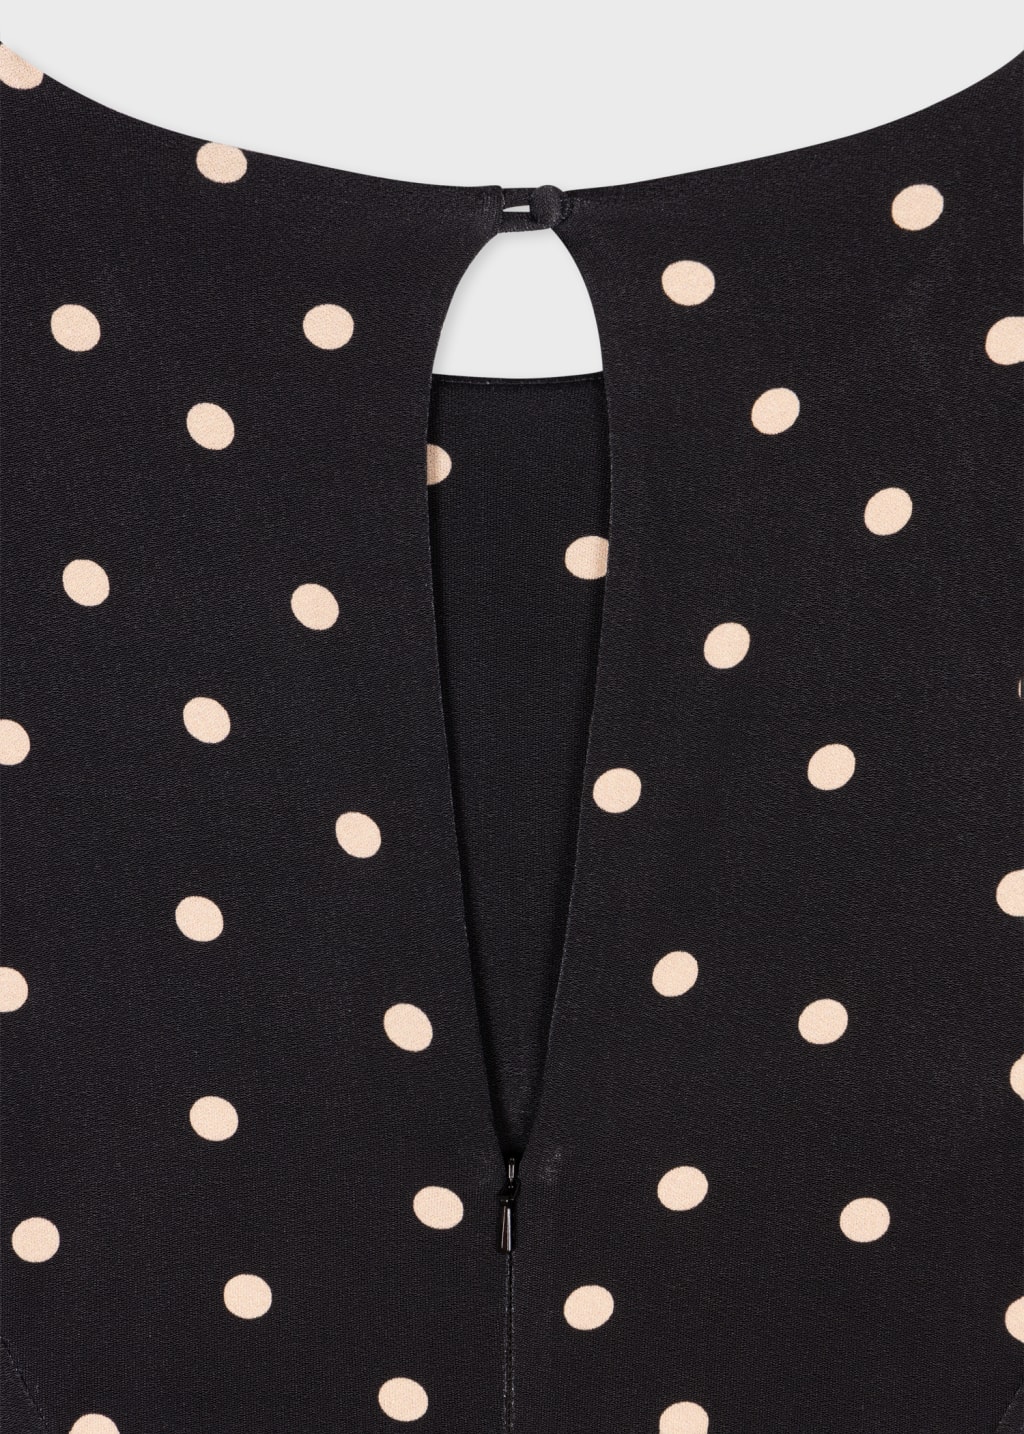 Model View - Women's Black Polka Dot Maxi Dress by Paul Smith